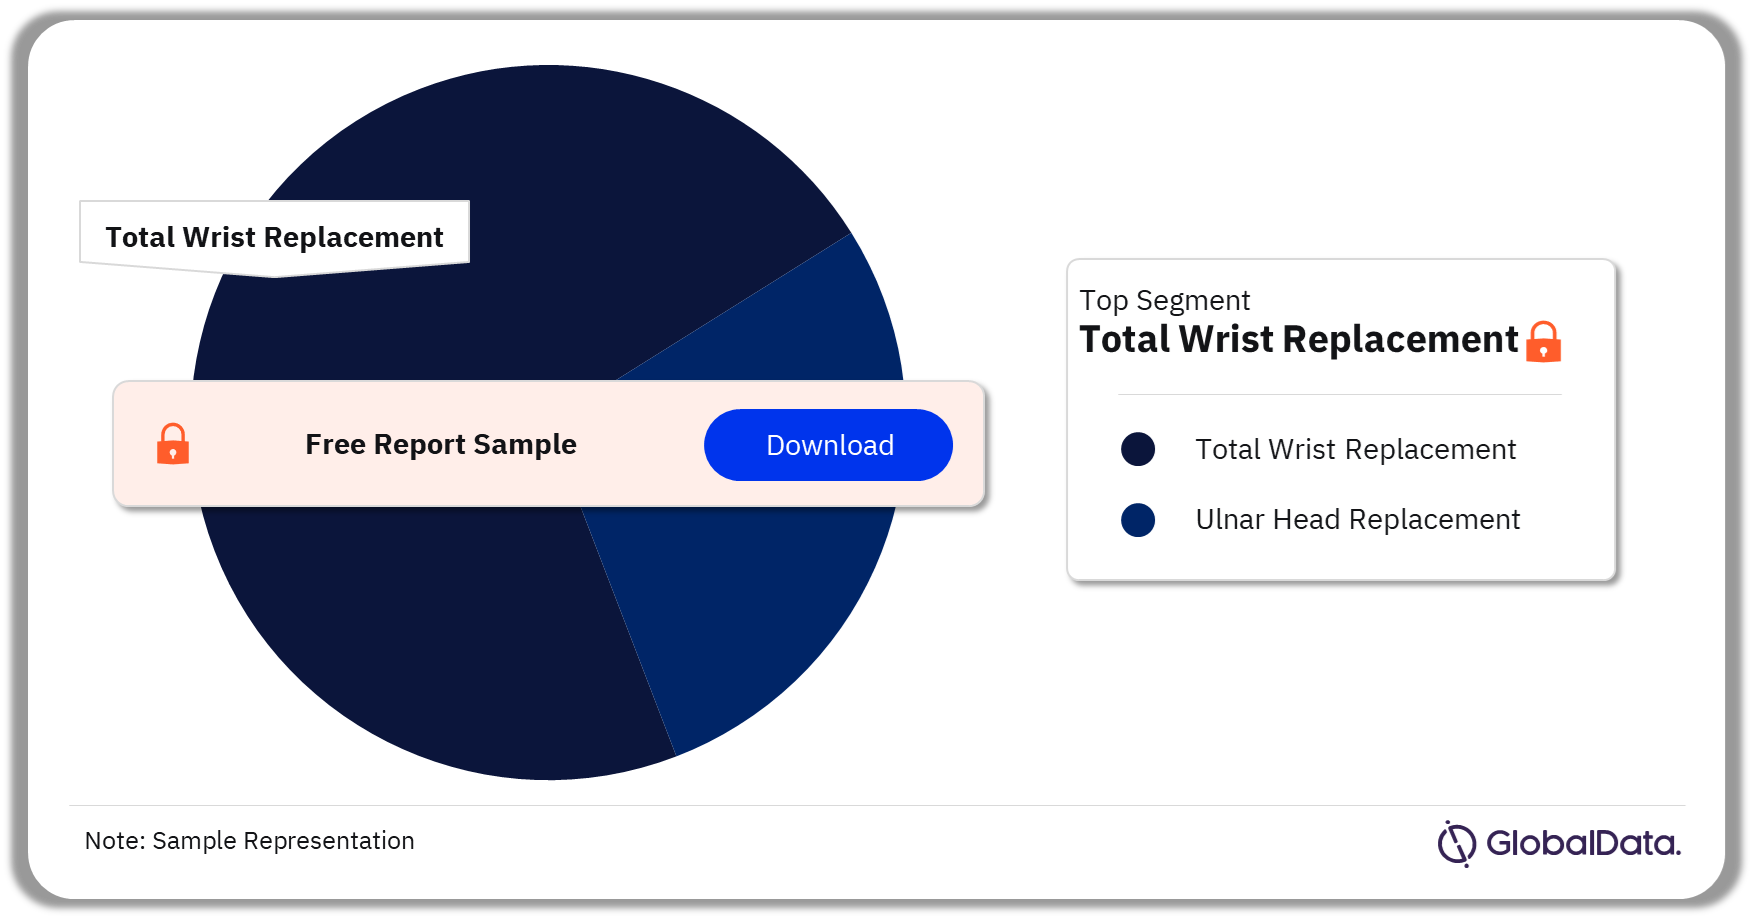 Wrist Replacement Market Analysis by Segments, 2023 (%)